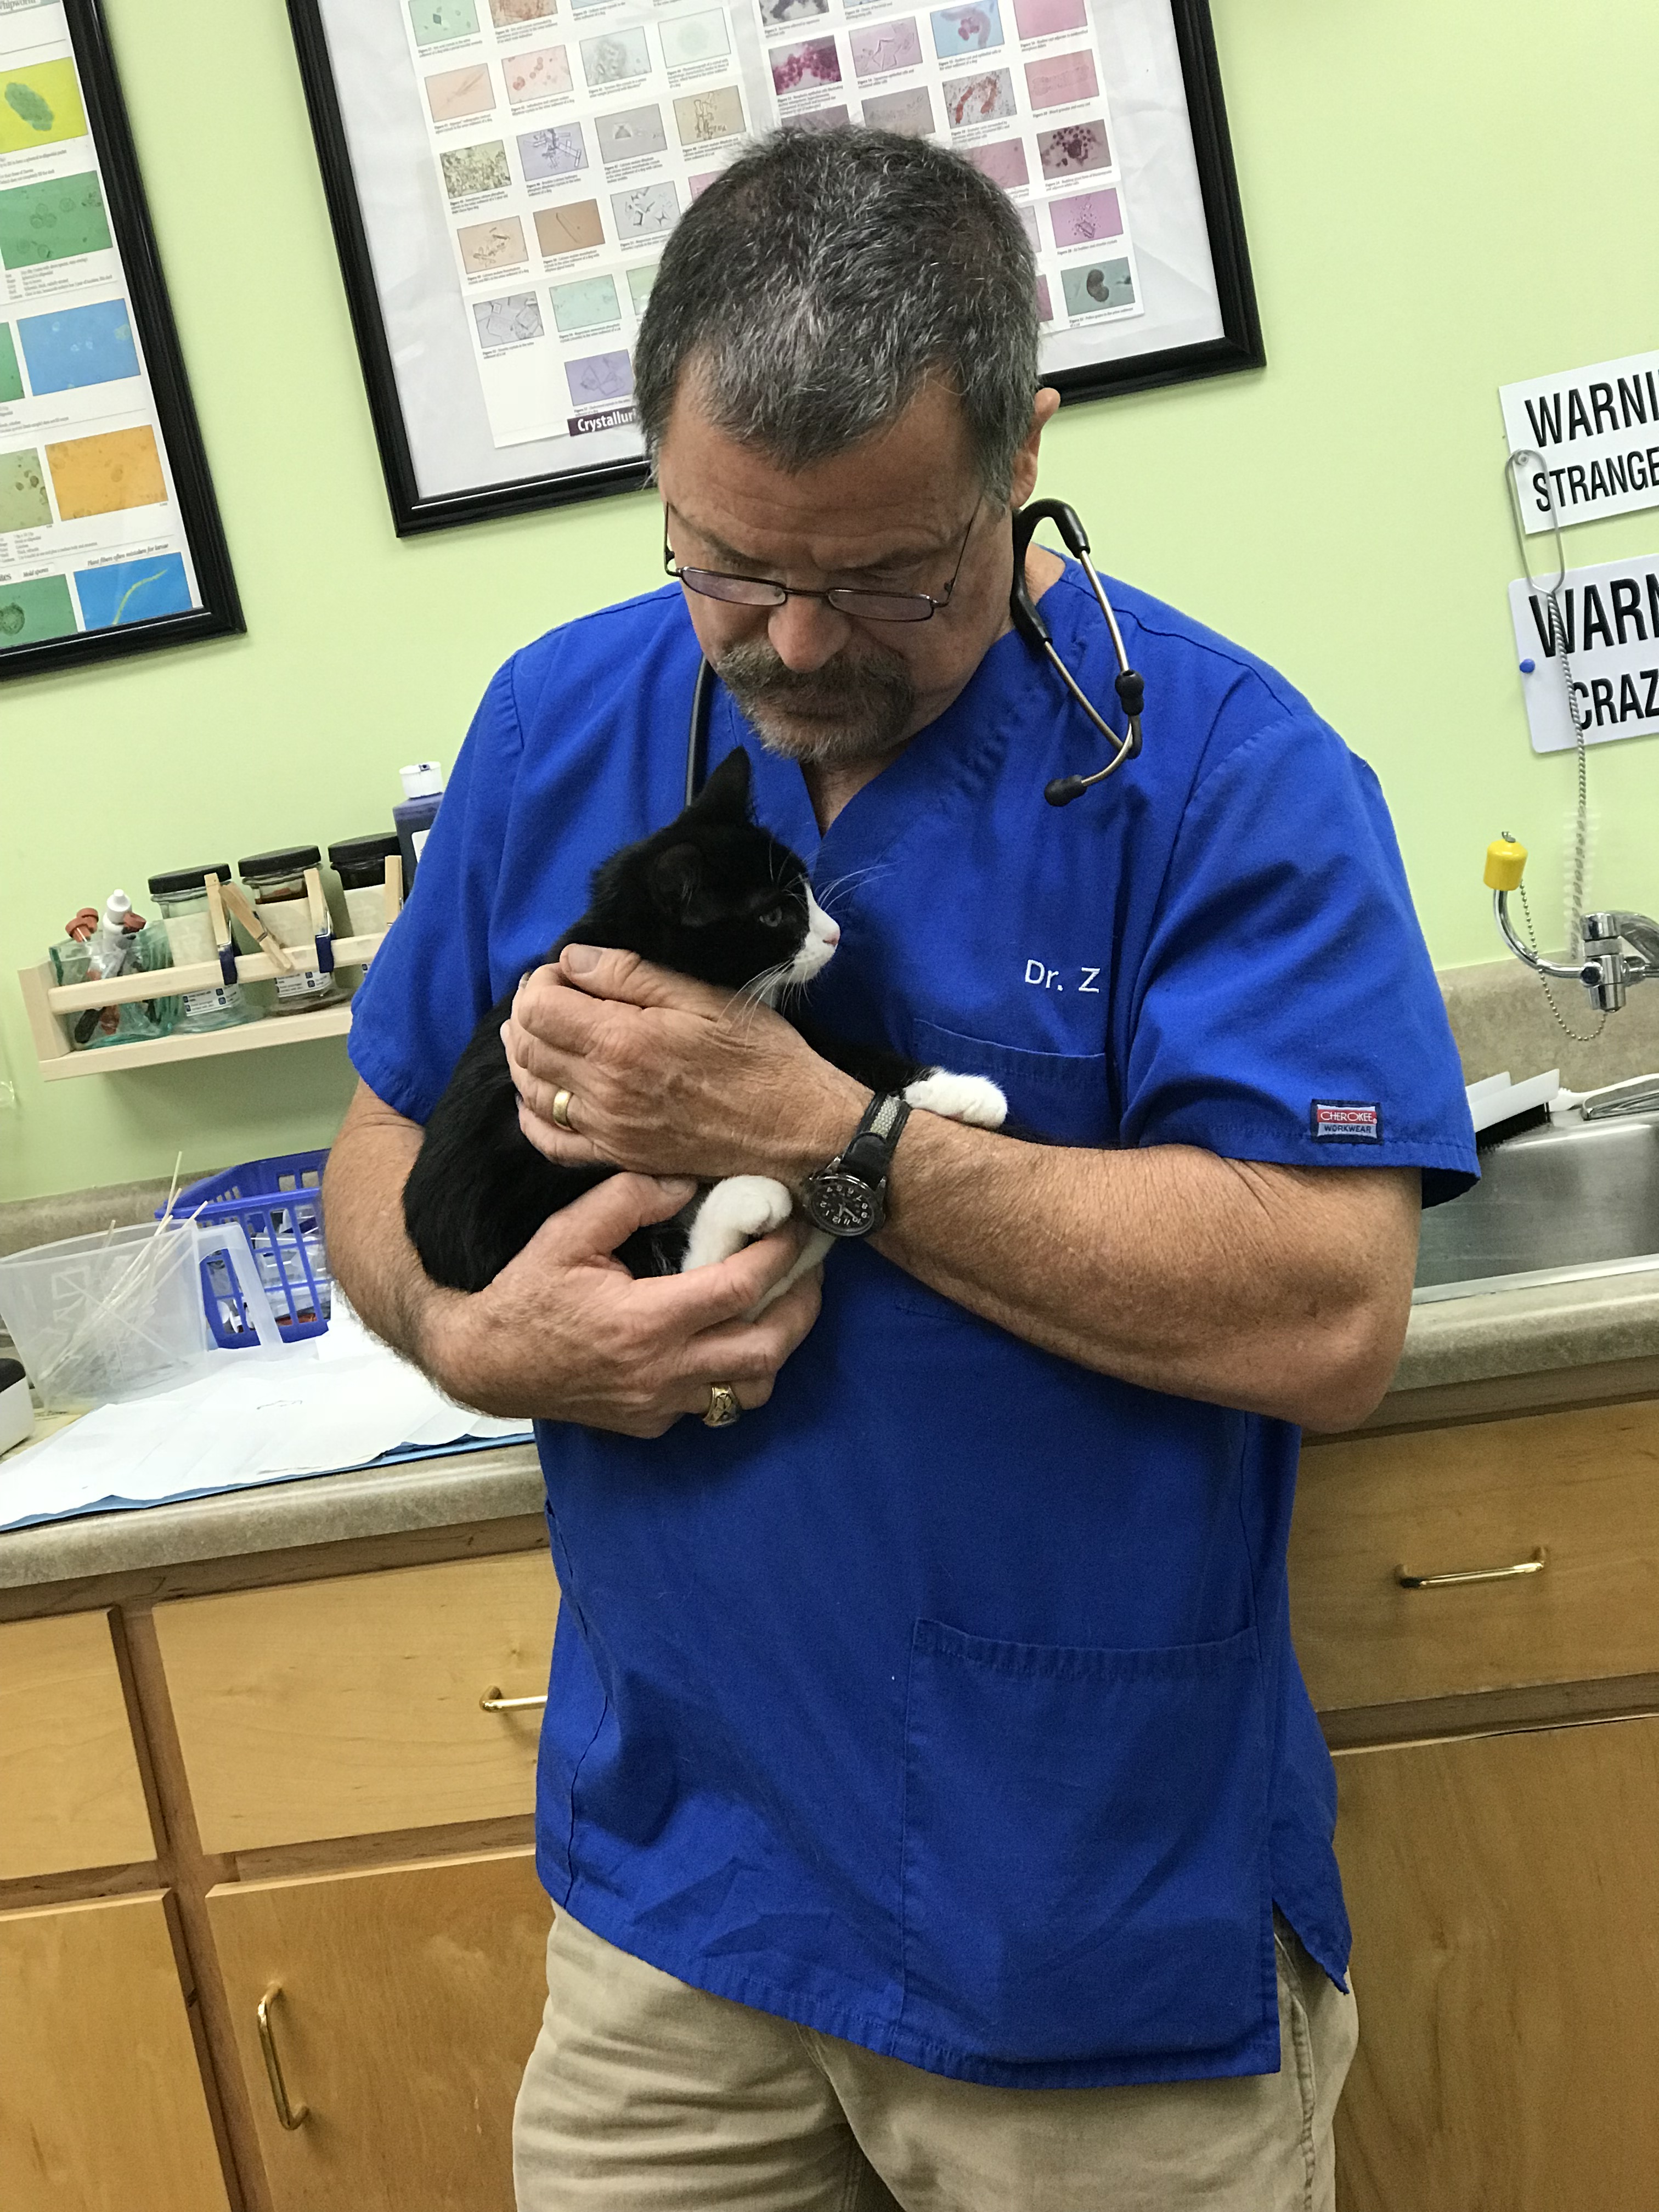 Dr. Zagrocki comforts a pet